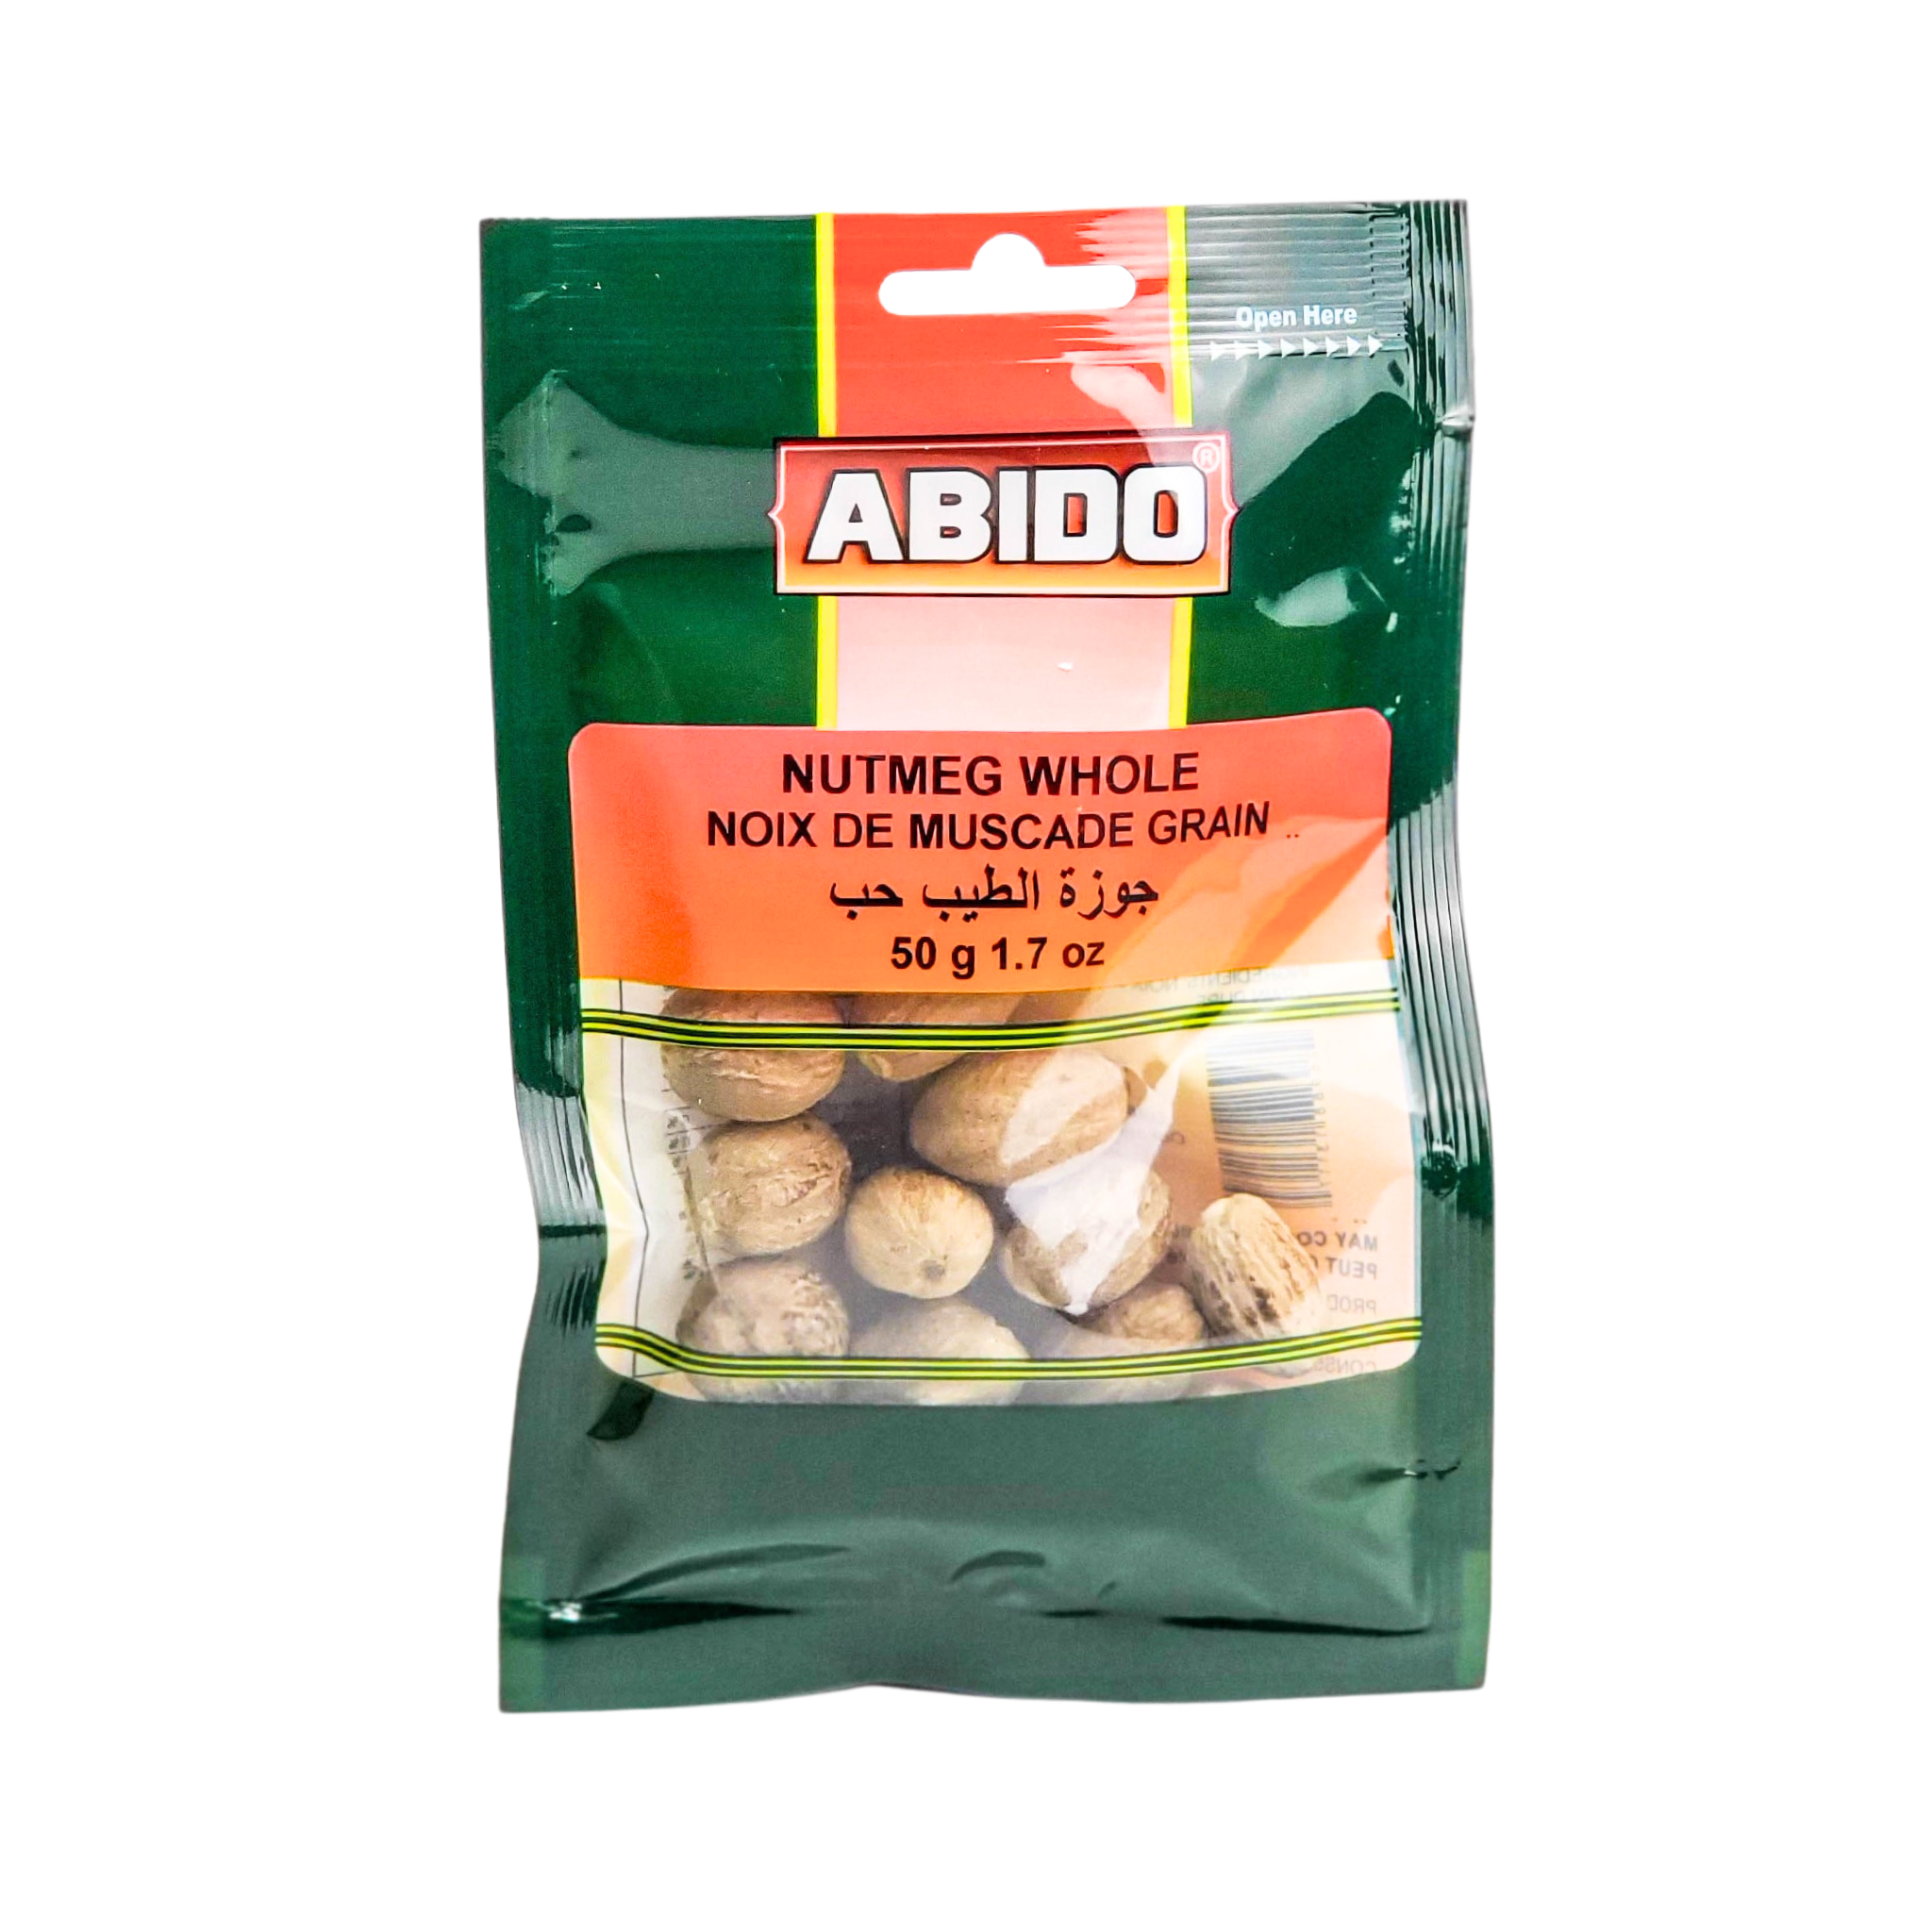 Abido Nutmeg Whole (Niox de Muscade Grain) 50g